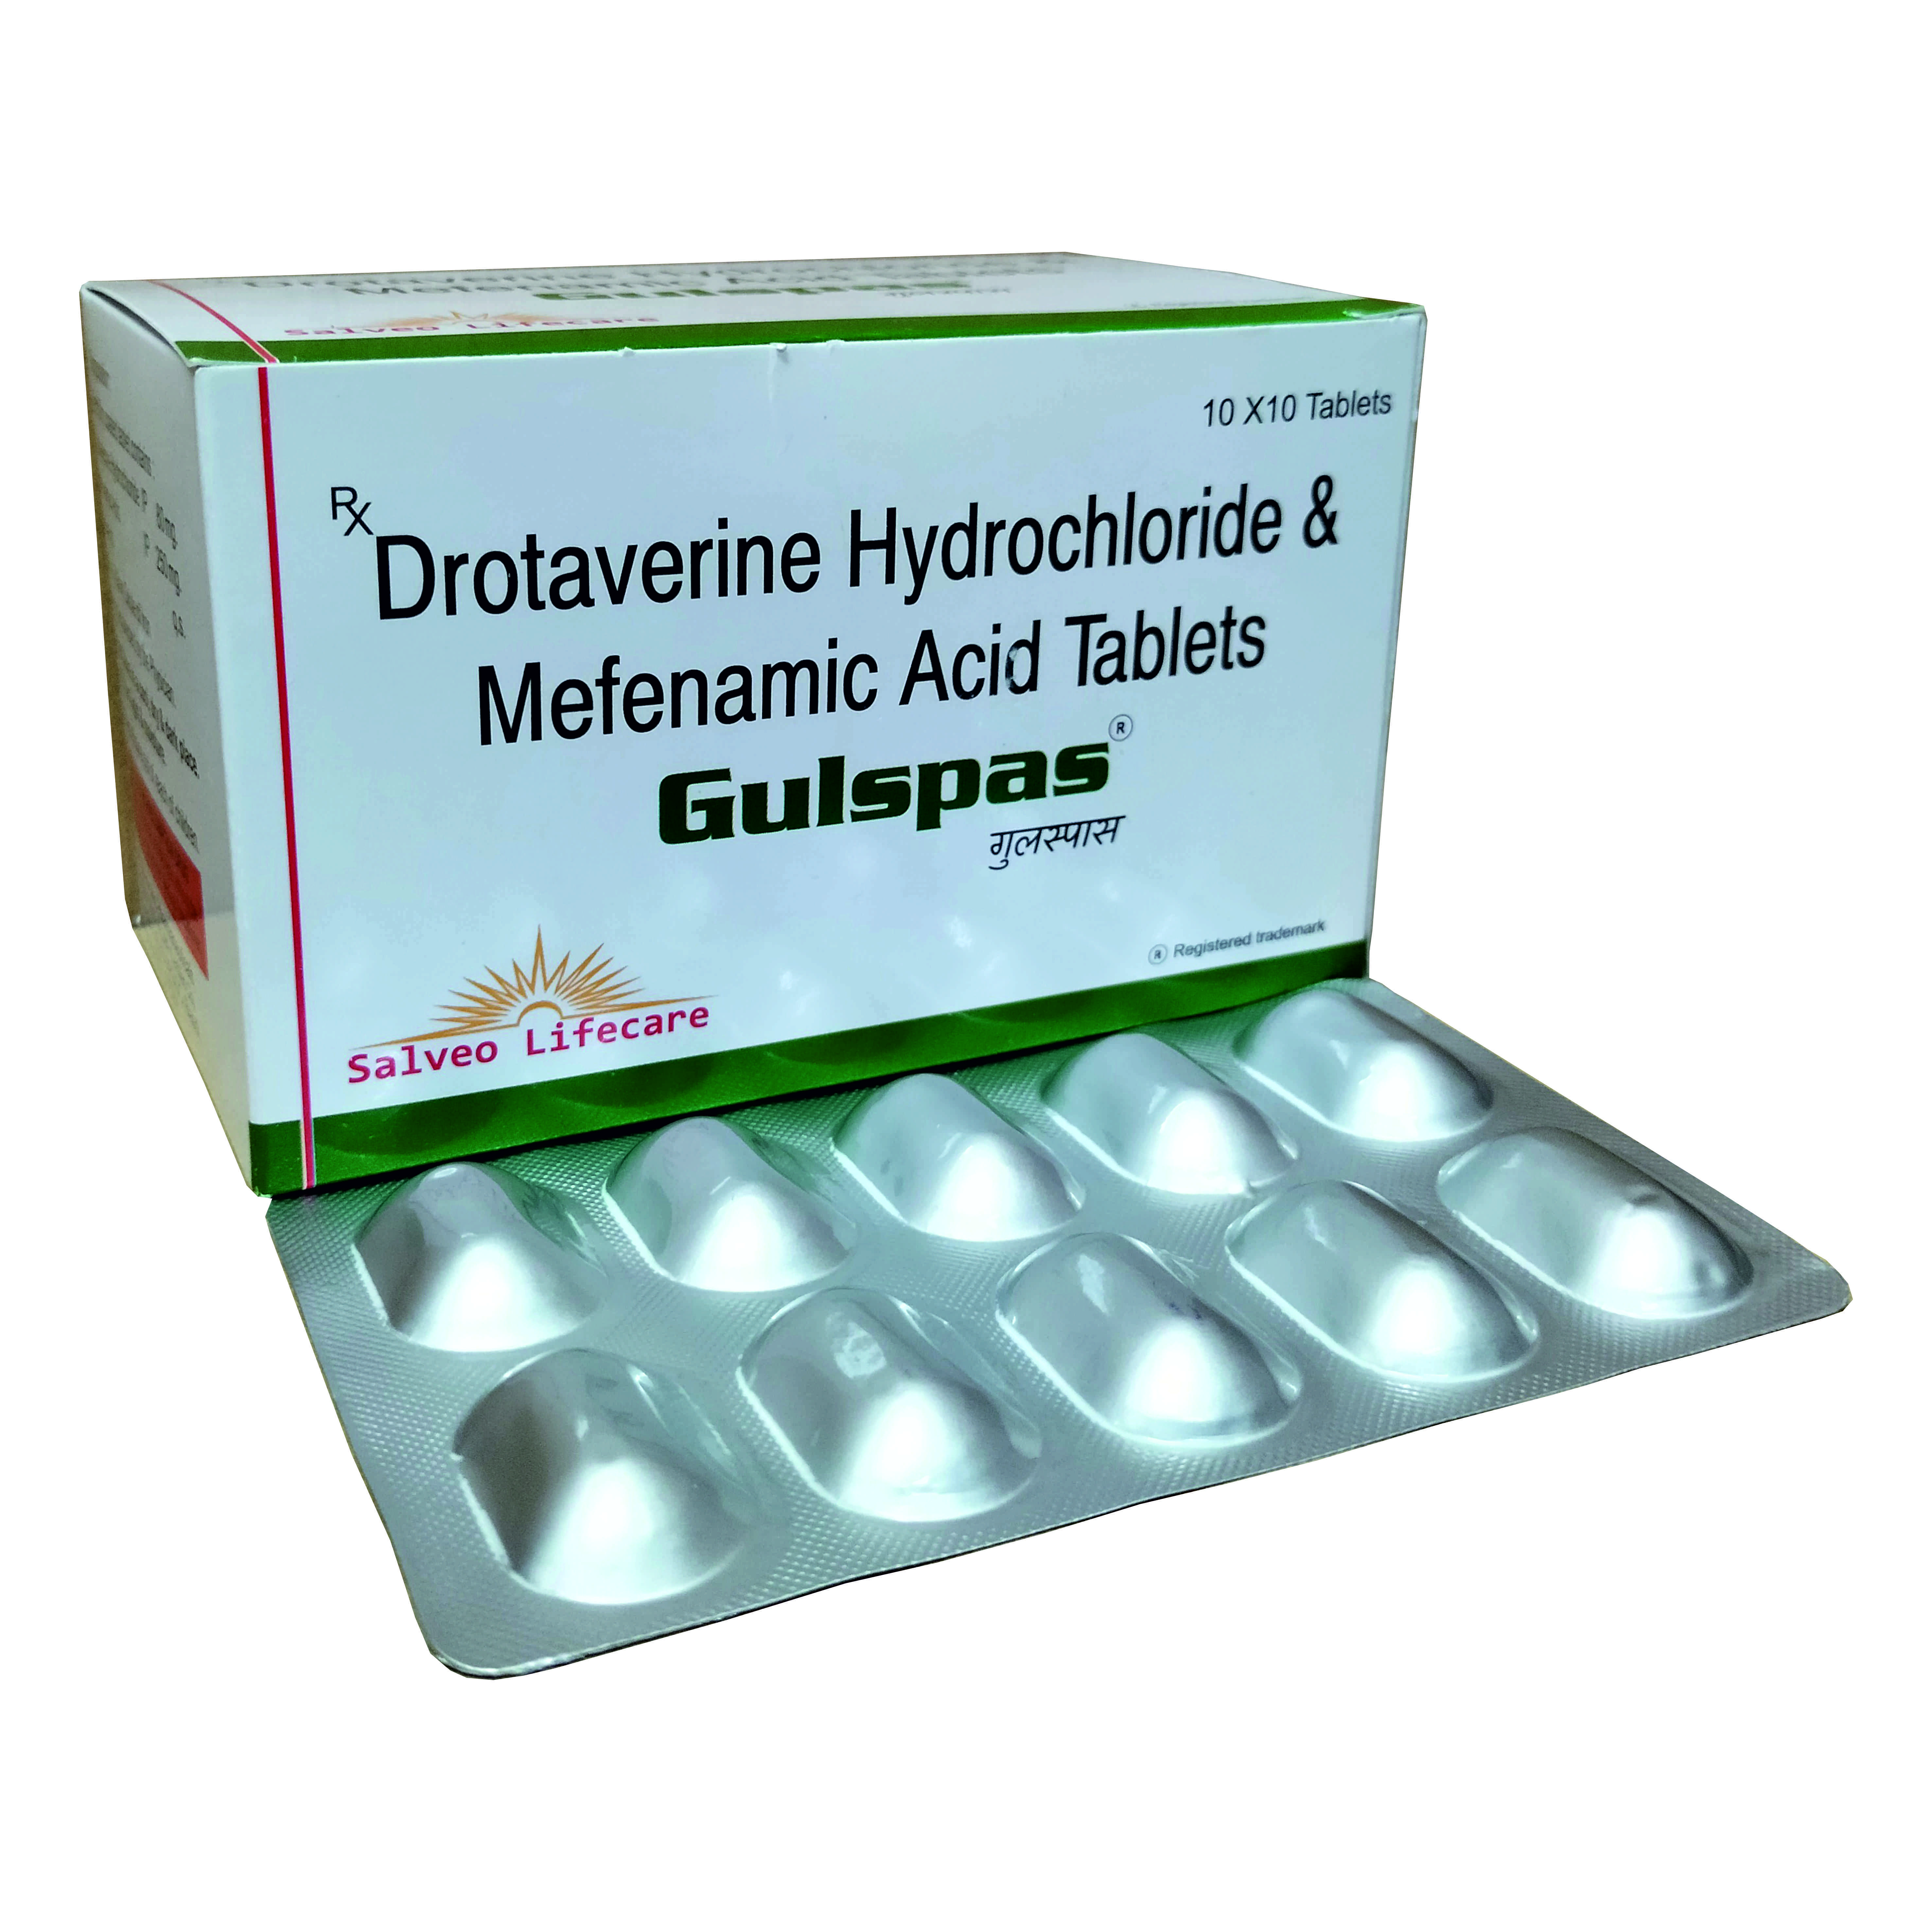 drotaverin 80 mg, mefenemic acid 250 mg